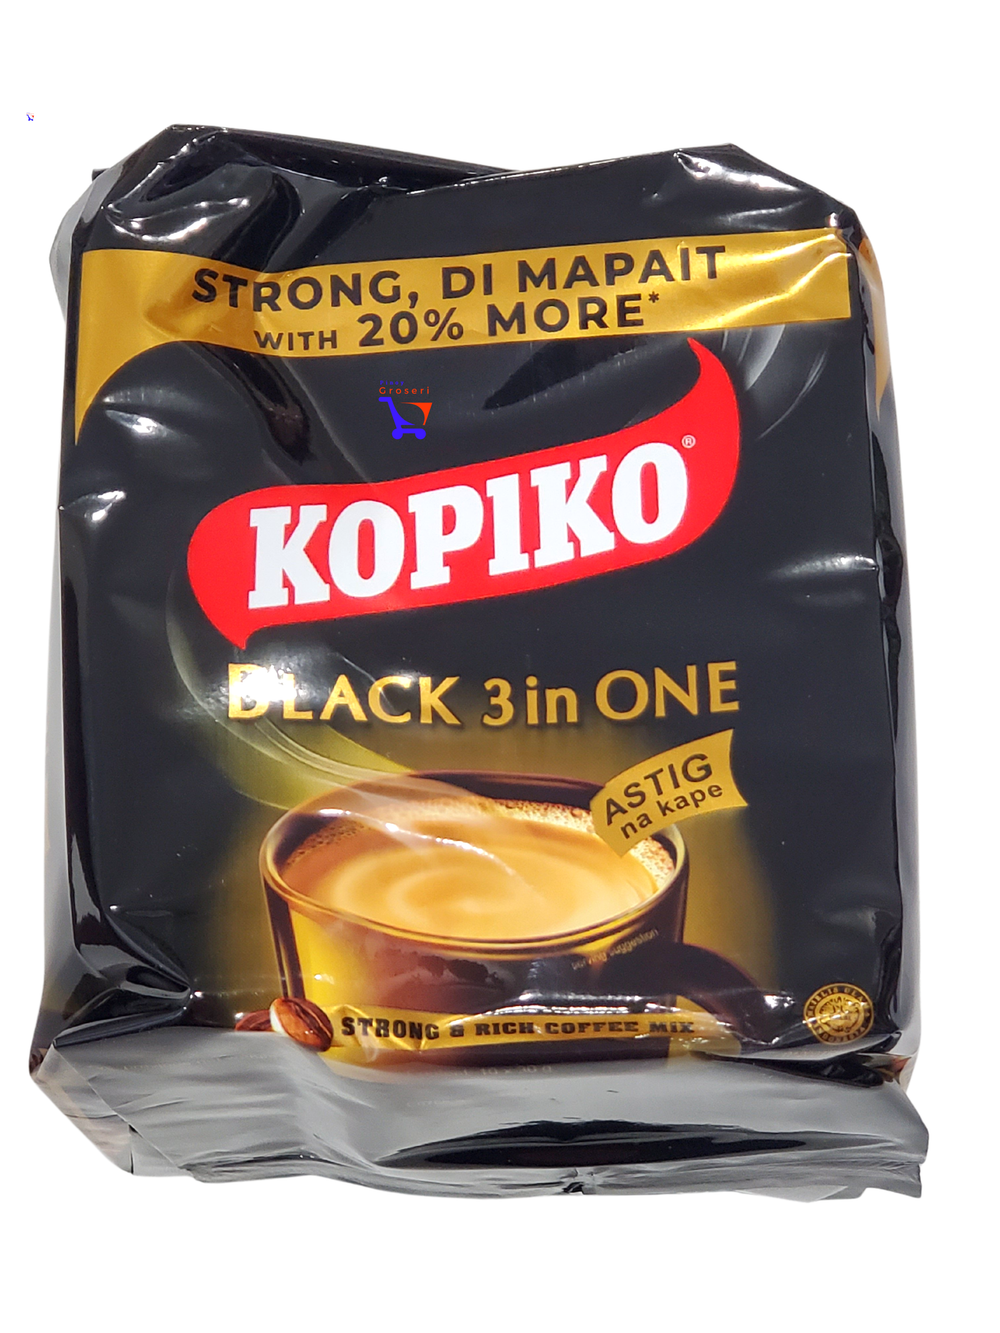 Kopiko Black 3 in 1 Instant Coffee (Astig)